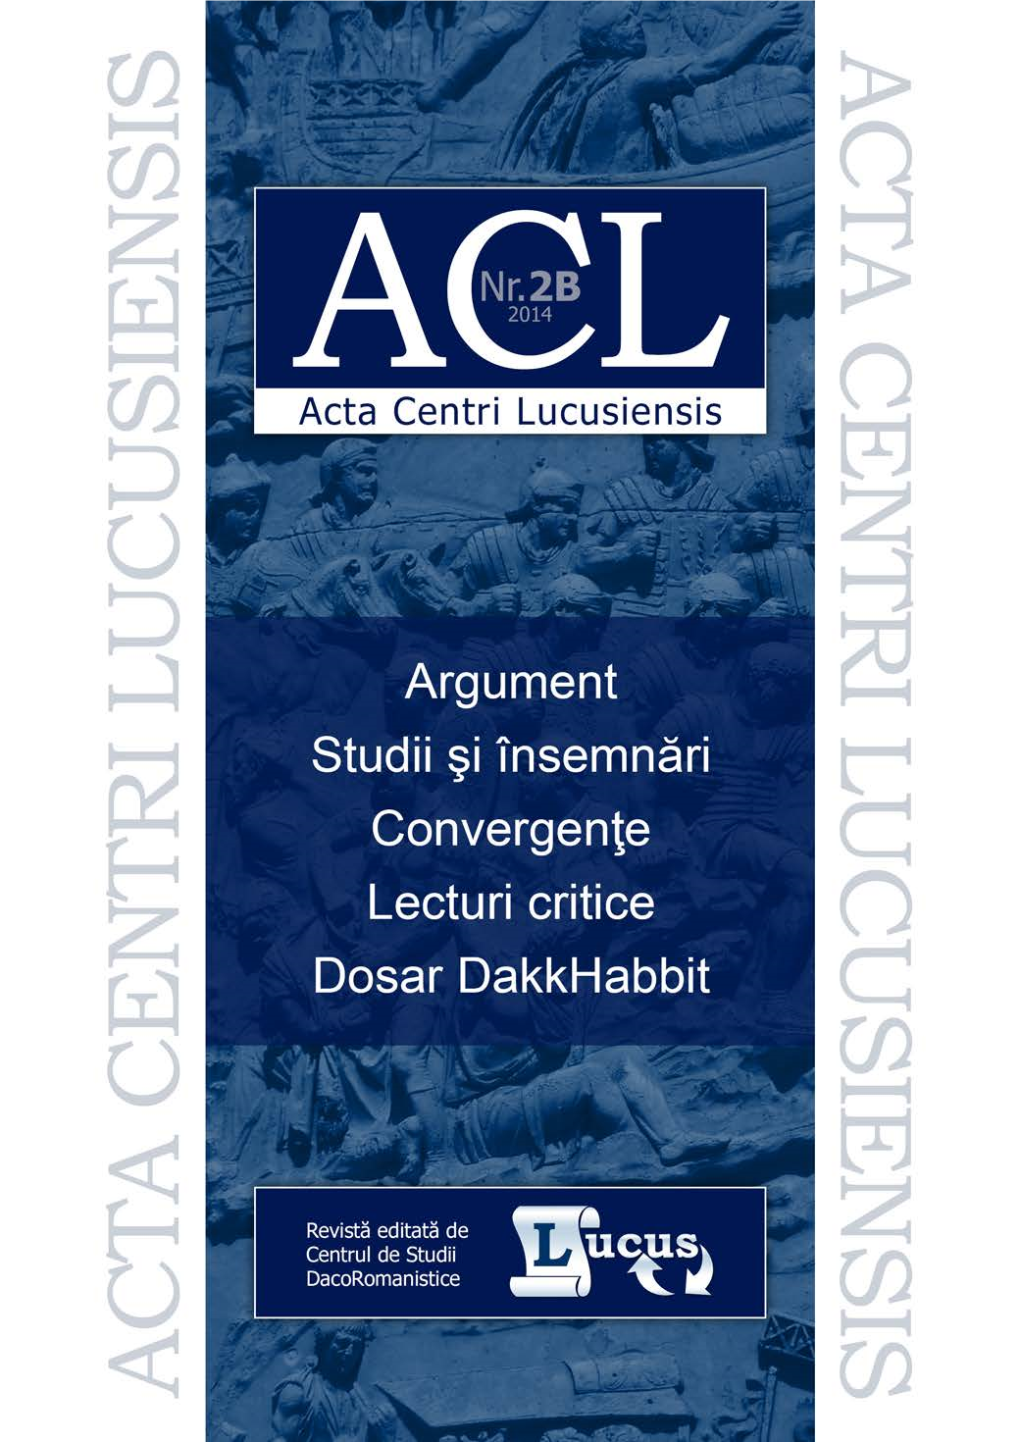 Acta Centri Lucusiensis